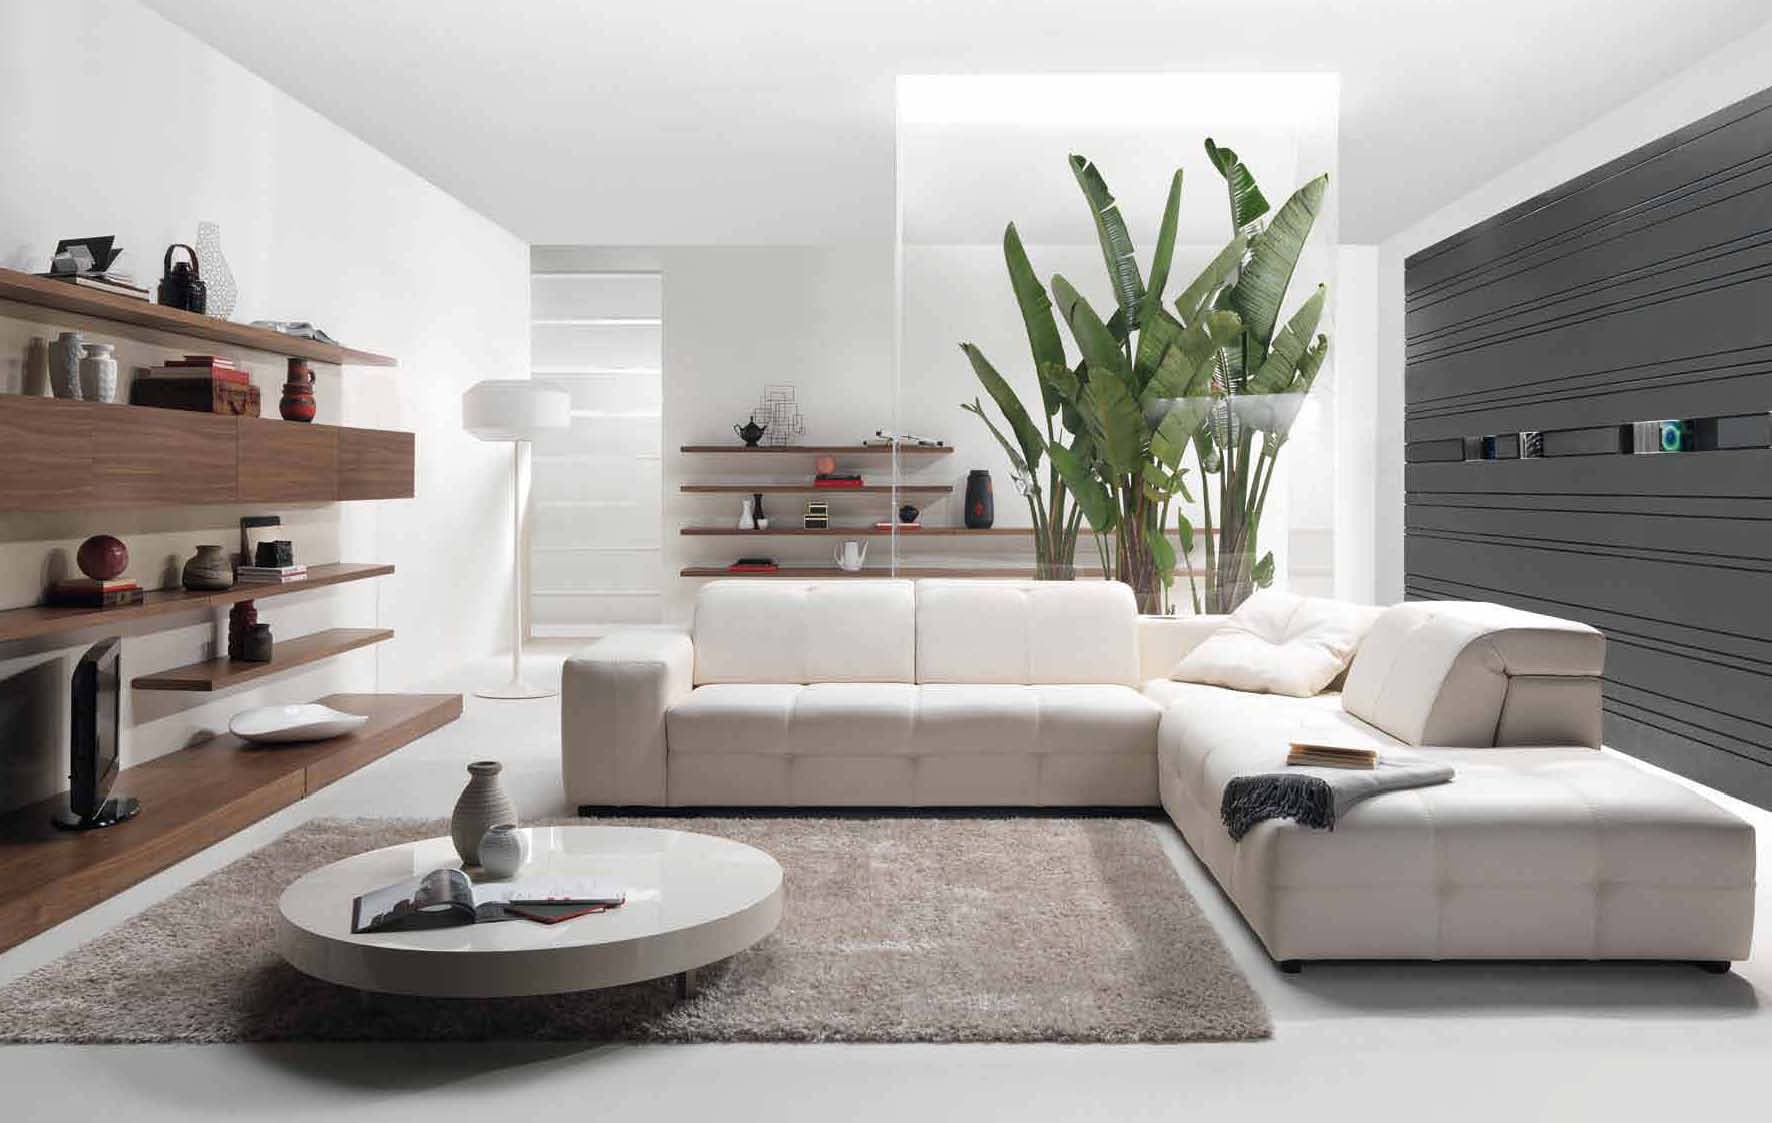 Modern Interior Design Ideas 8654 Hd Wallpapers in Architecture 1772x1123